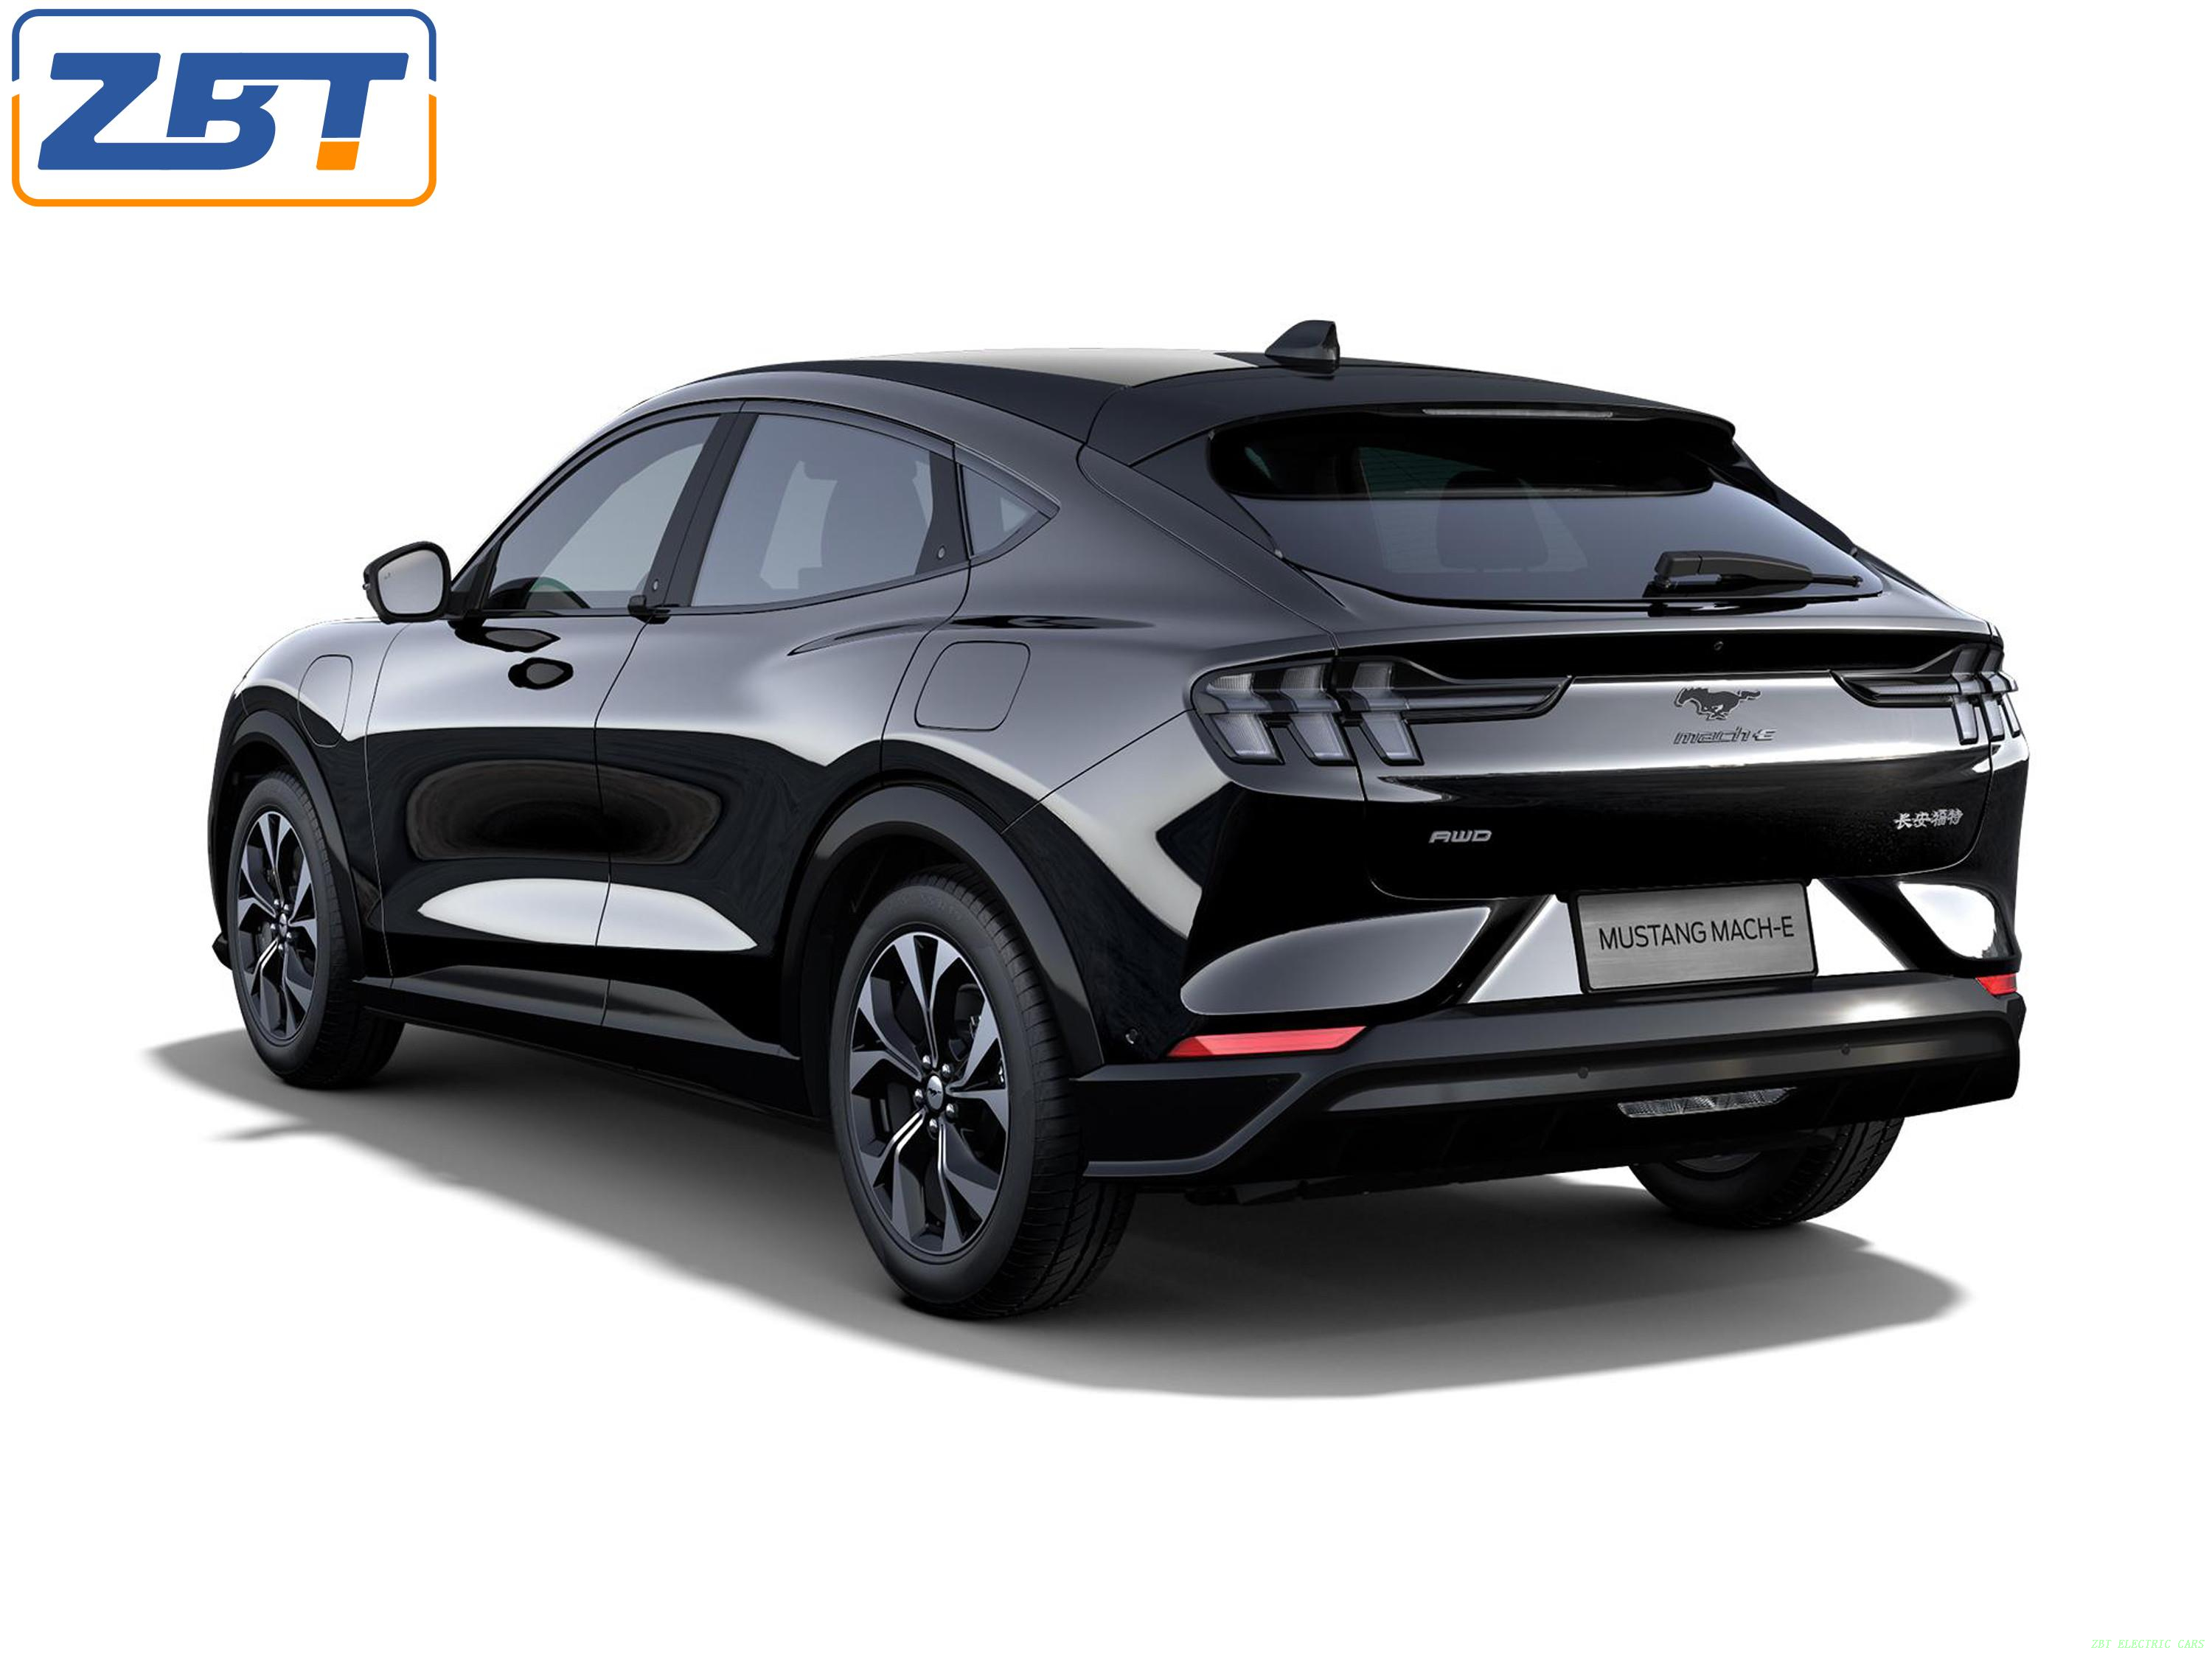 Mustang Mach-e Black Color Electric SUV